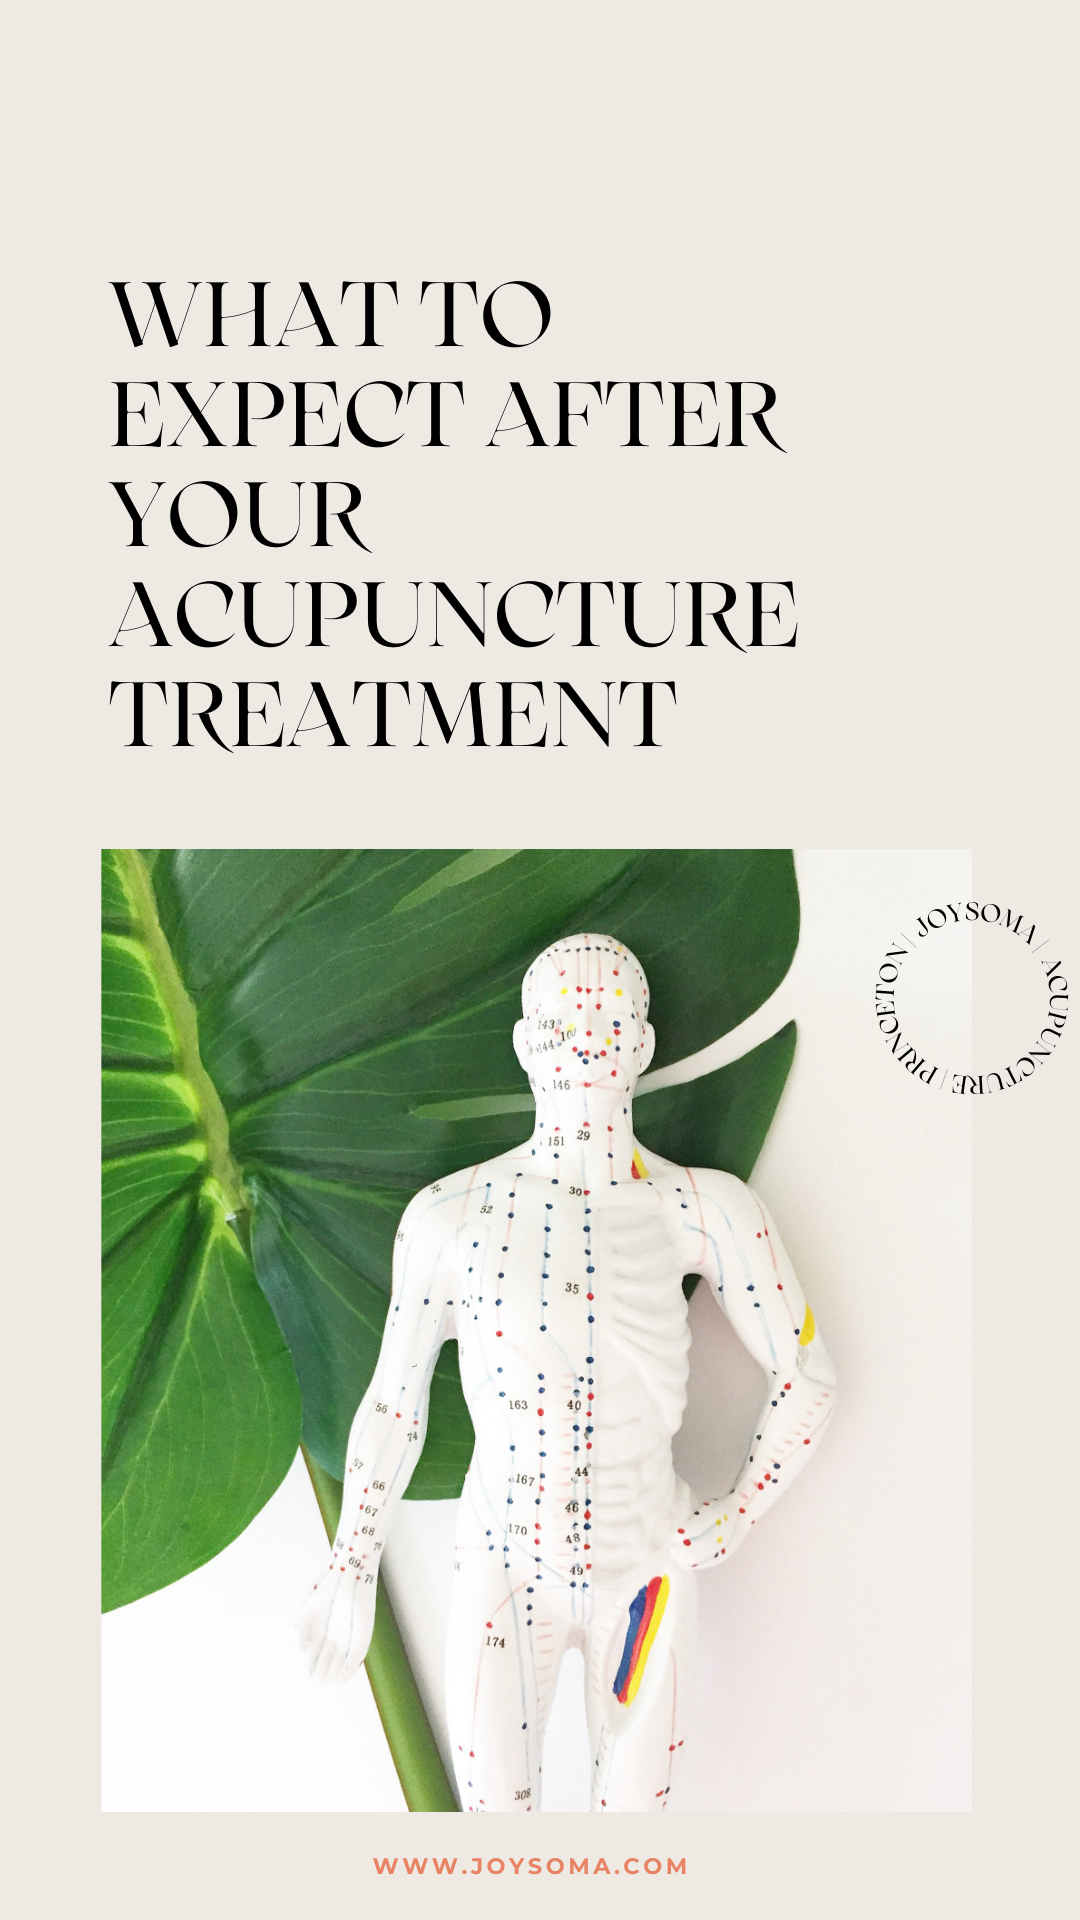 JOYSOMA Acupuncture | Princeton, NJ